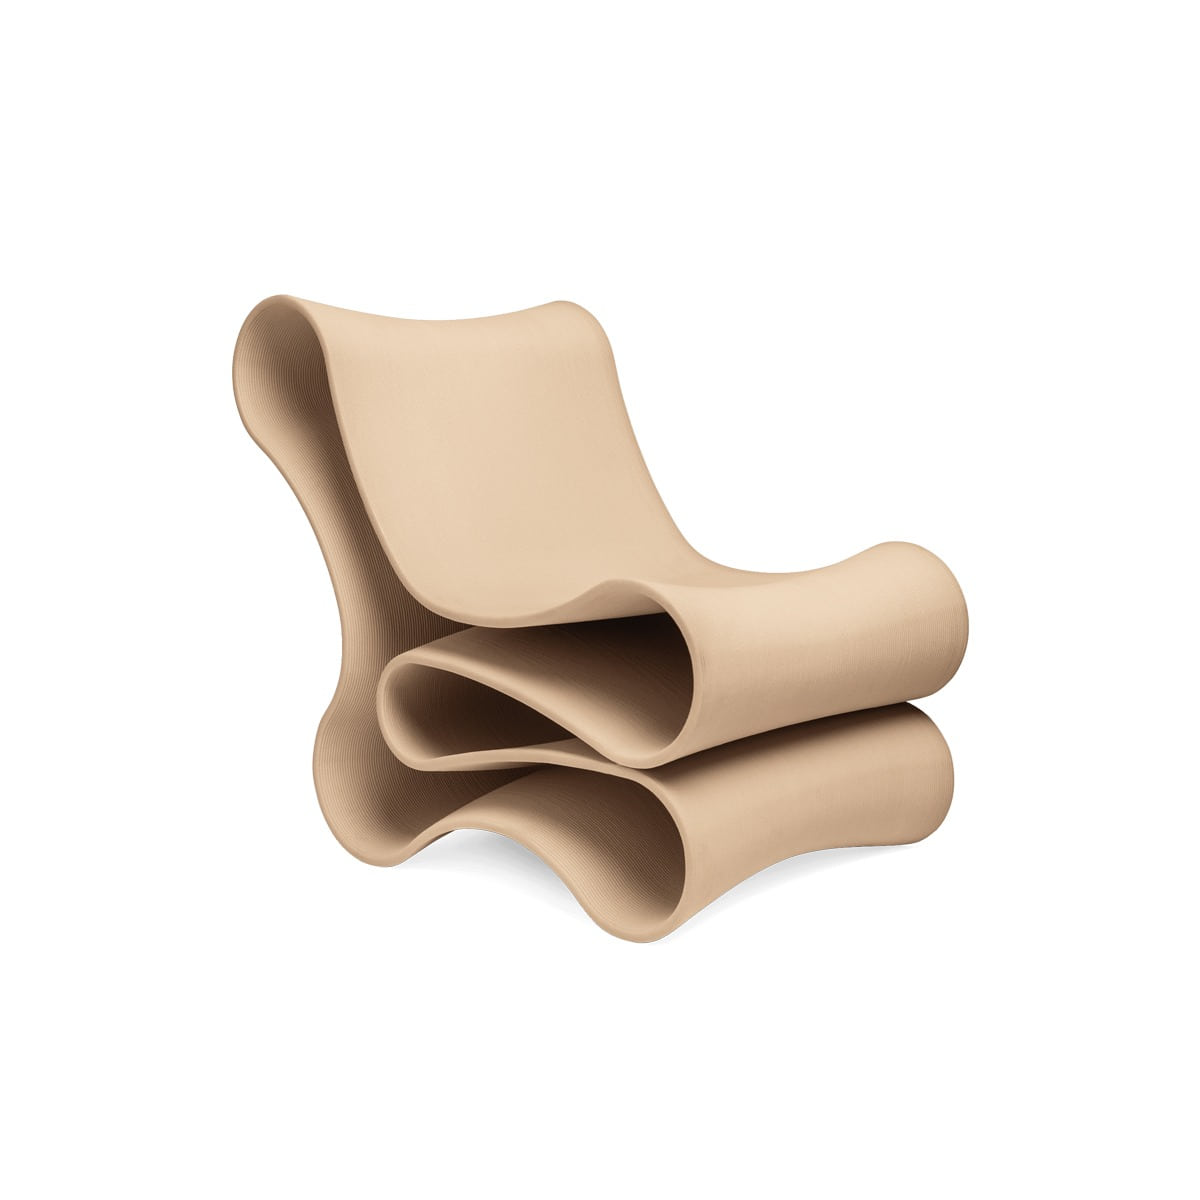 REFORM DESIGN LAB Reform Lounge Chair - Natural